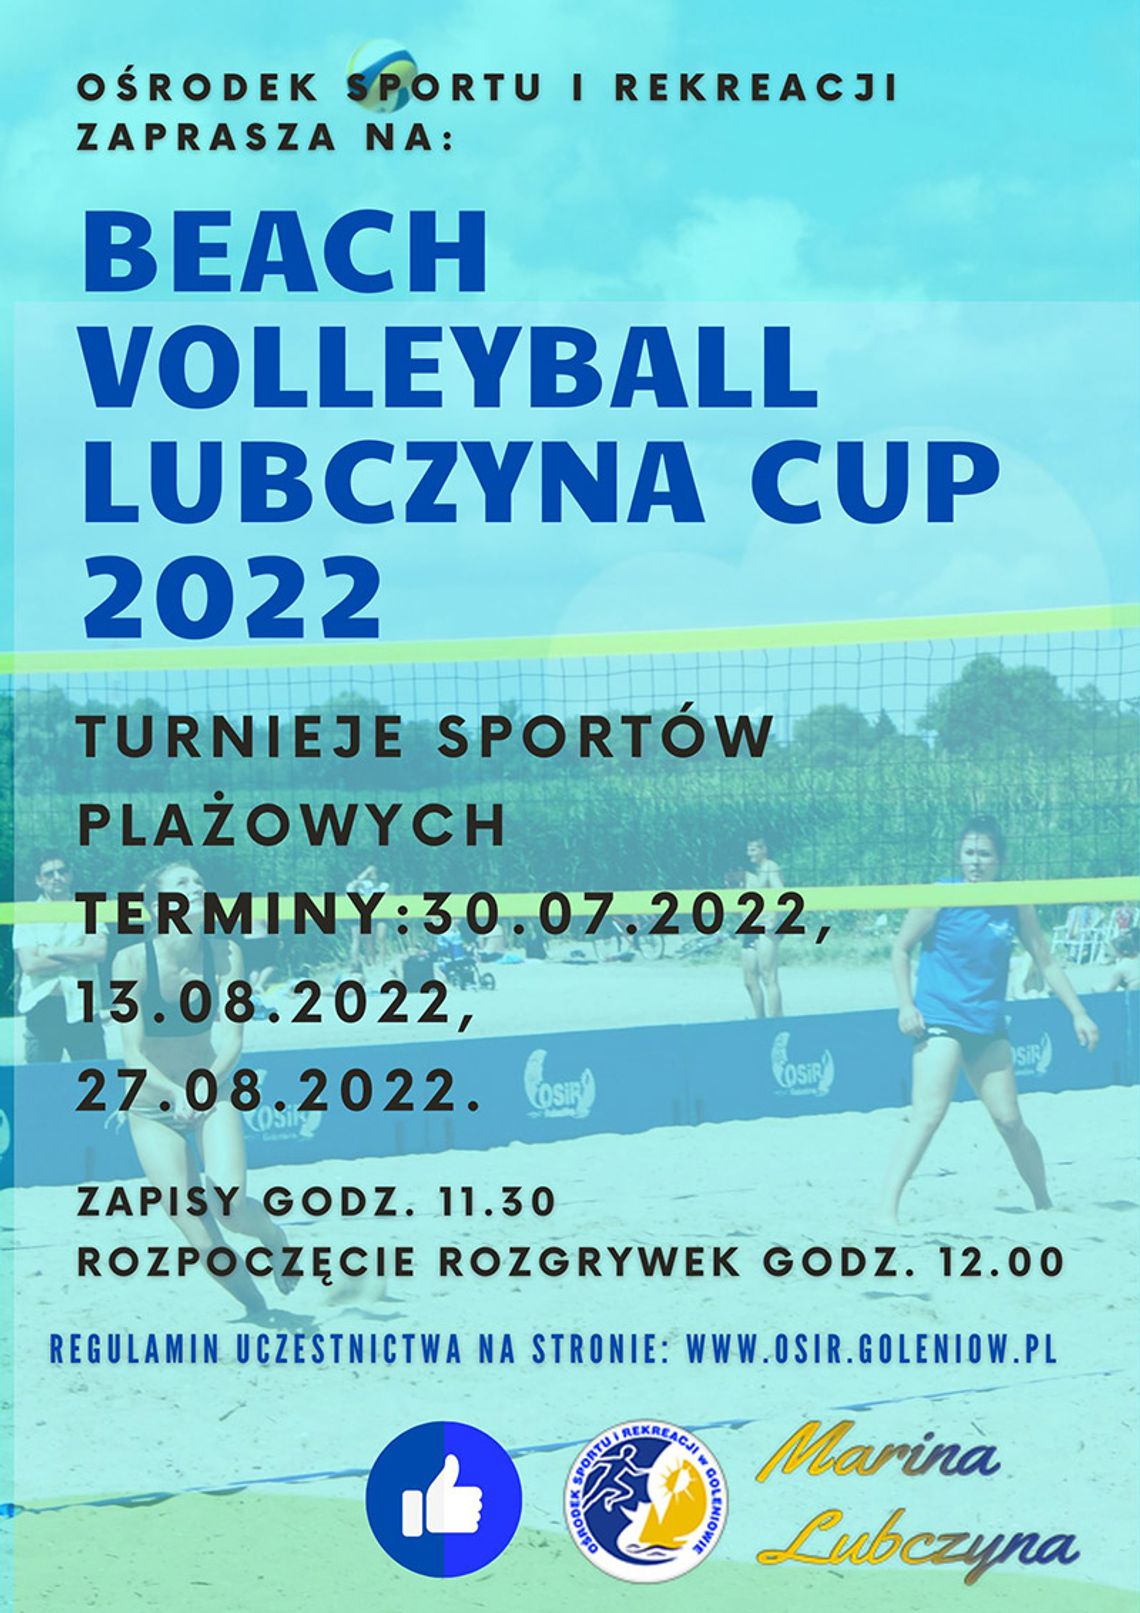 Beach Volleyball Lubczyna CUP 2022 